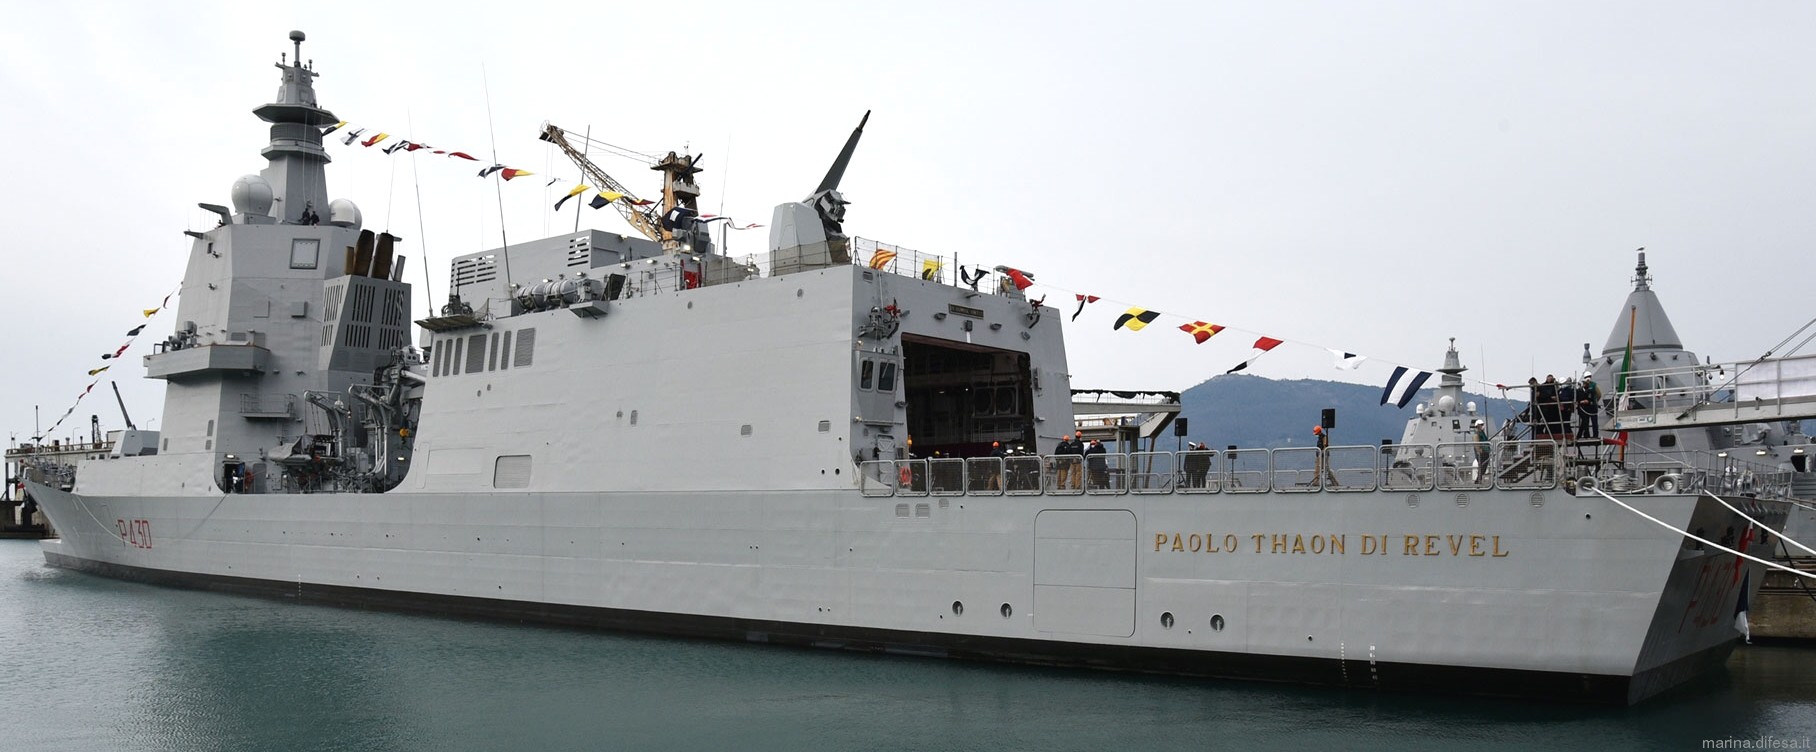 p-430 paolo thaon di revel its nave offshore patrol vessel opv ppa italian navy marina militare 17